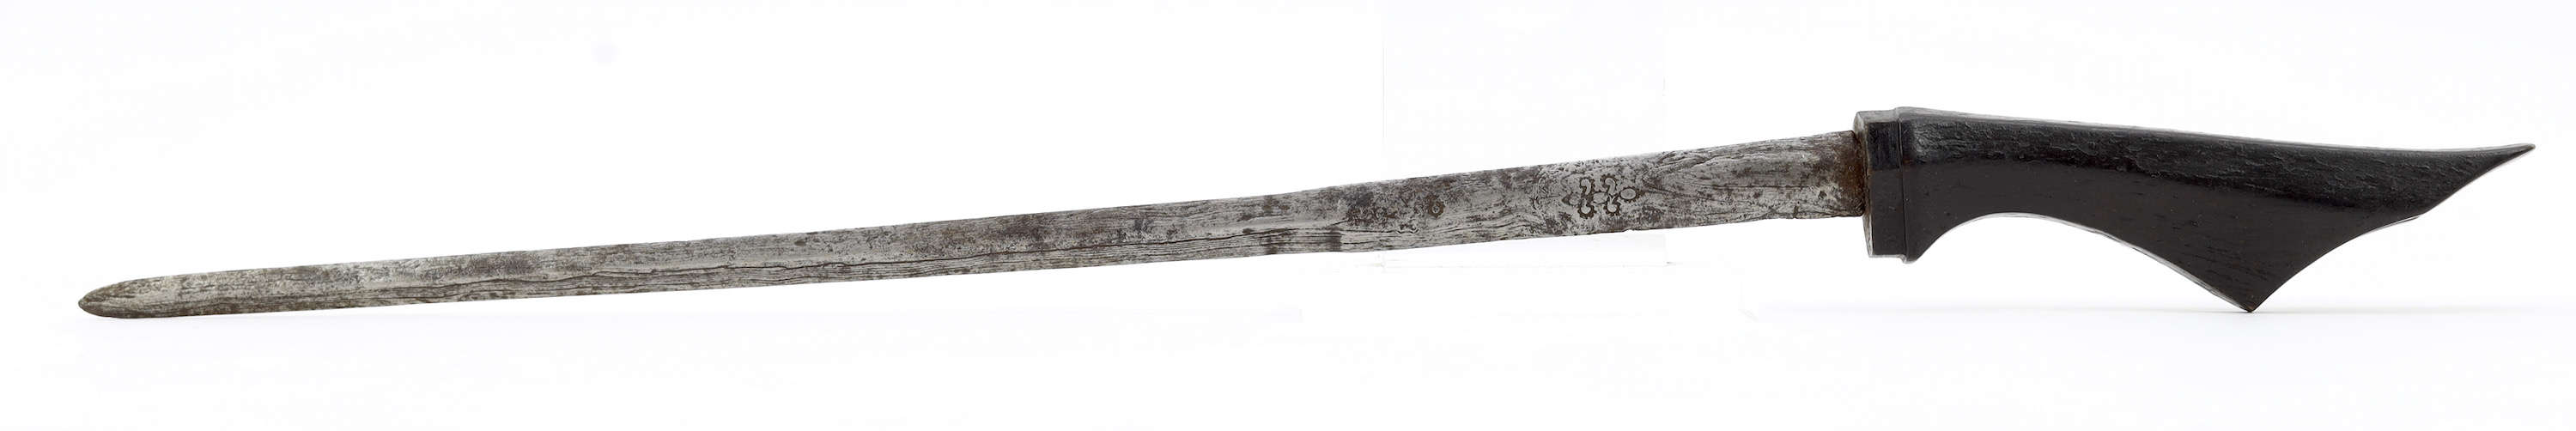 Old Javanese dagger with stiletto blade